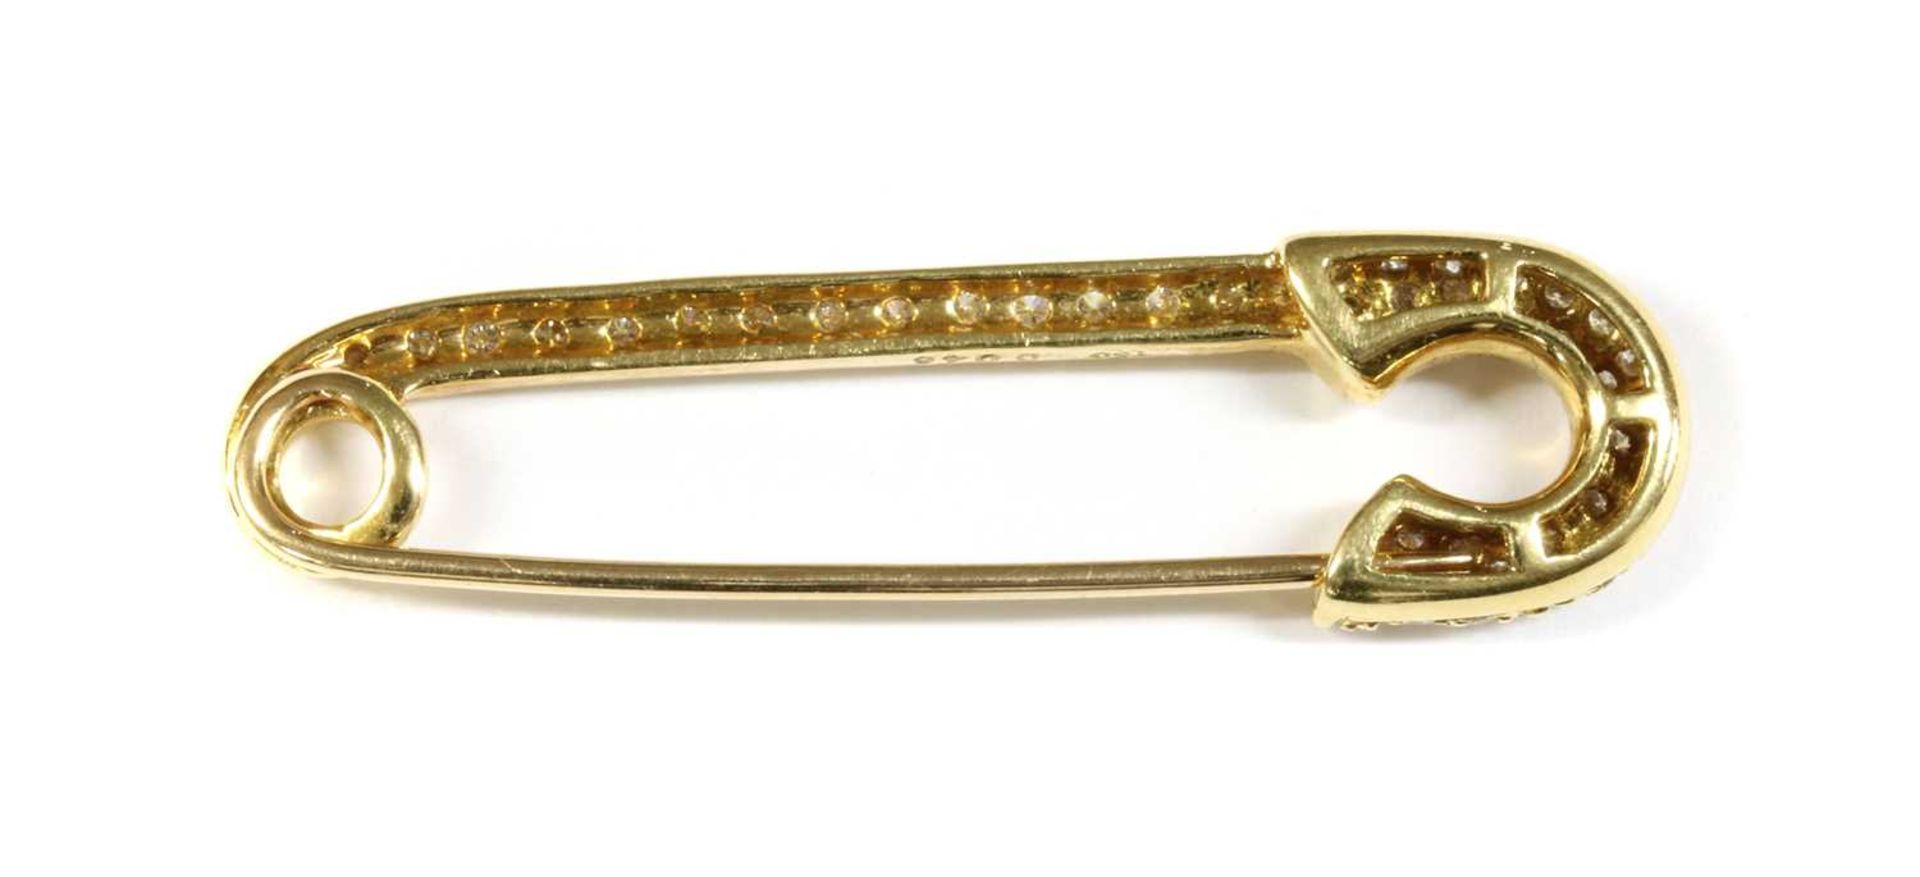 A gold, diamond set, safety pin-style brooch, - Image 2 of 2